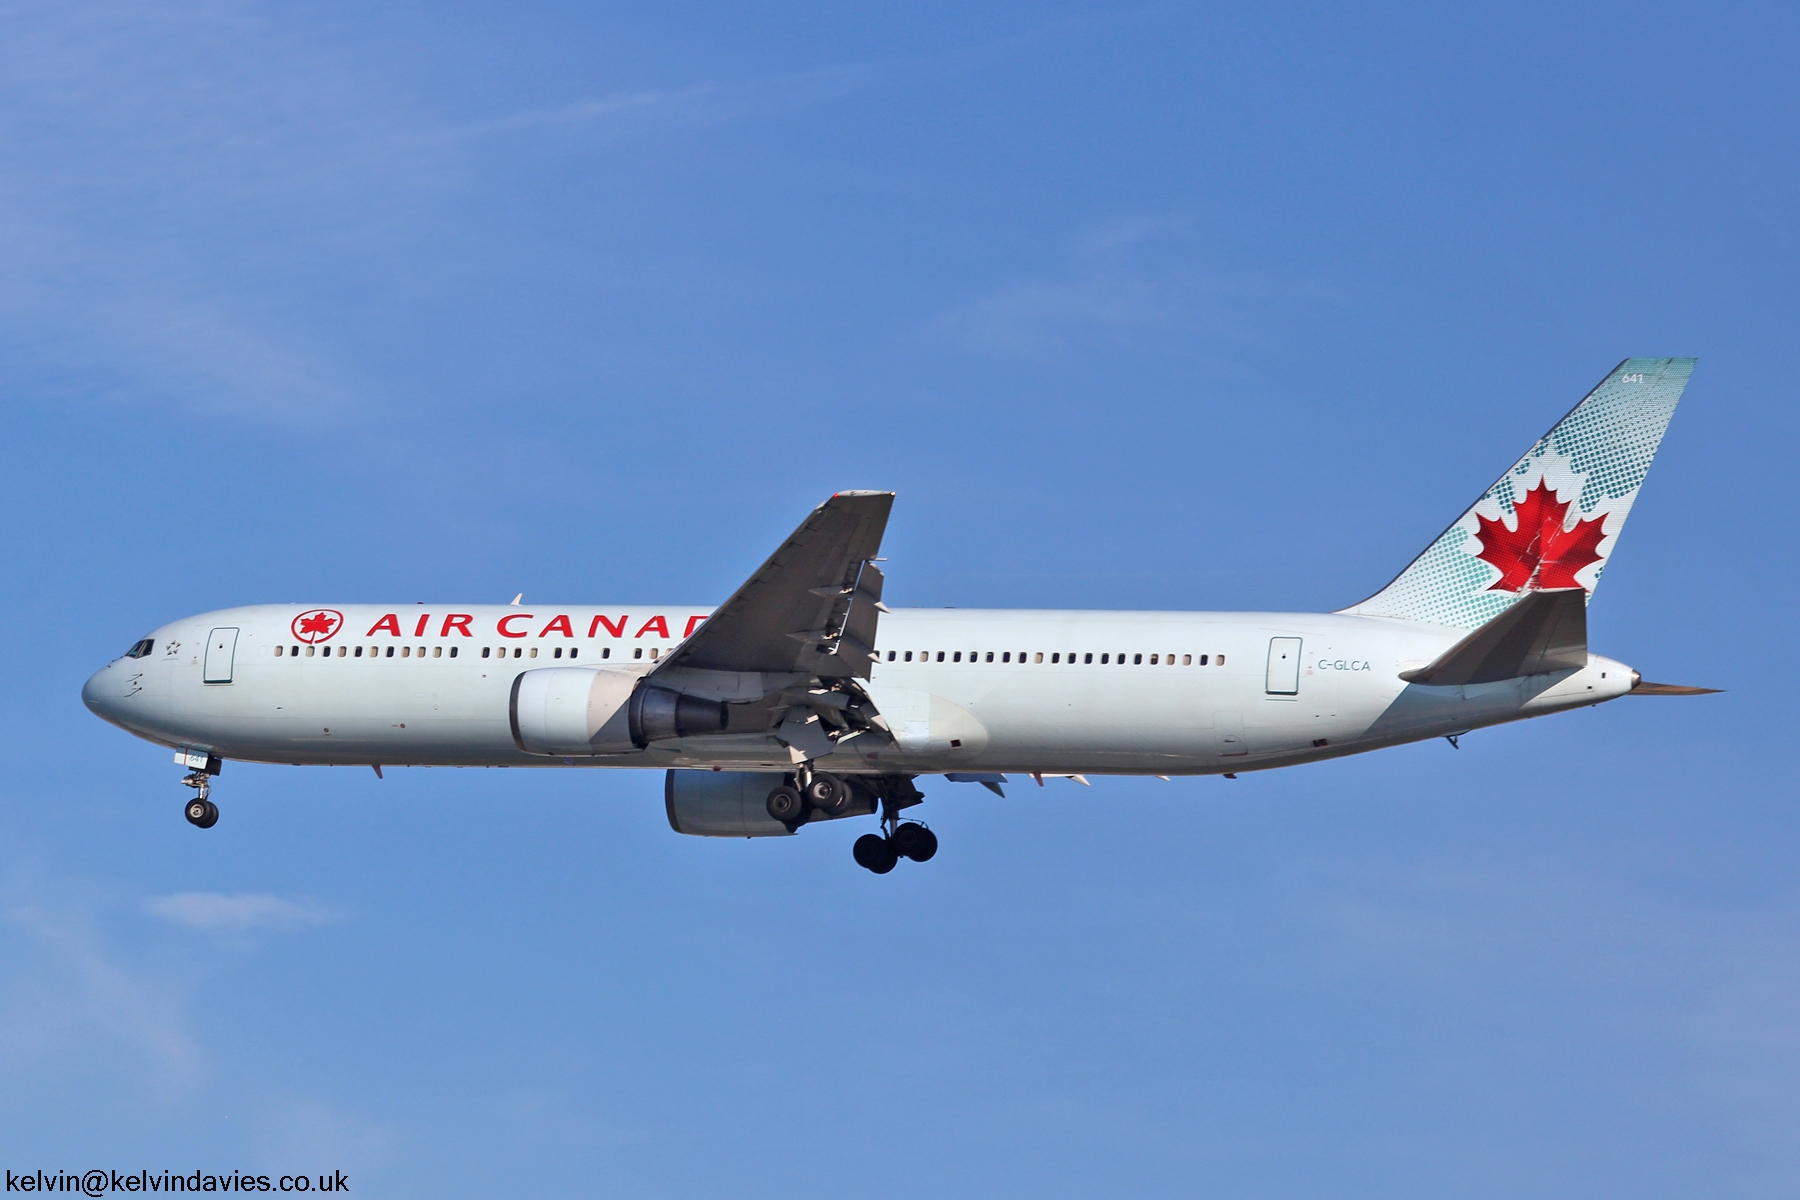 Air Canada 767-300 C-GLCA